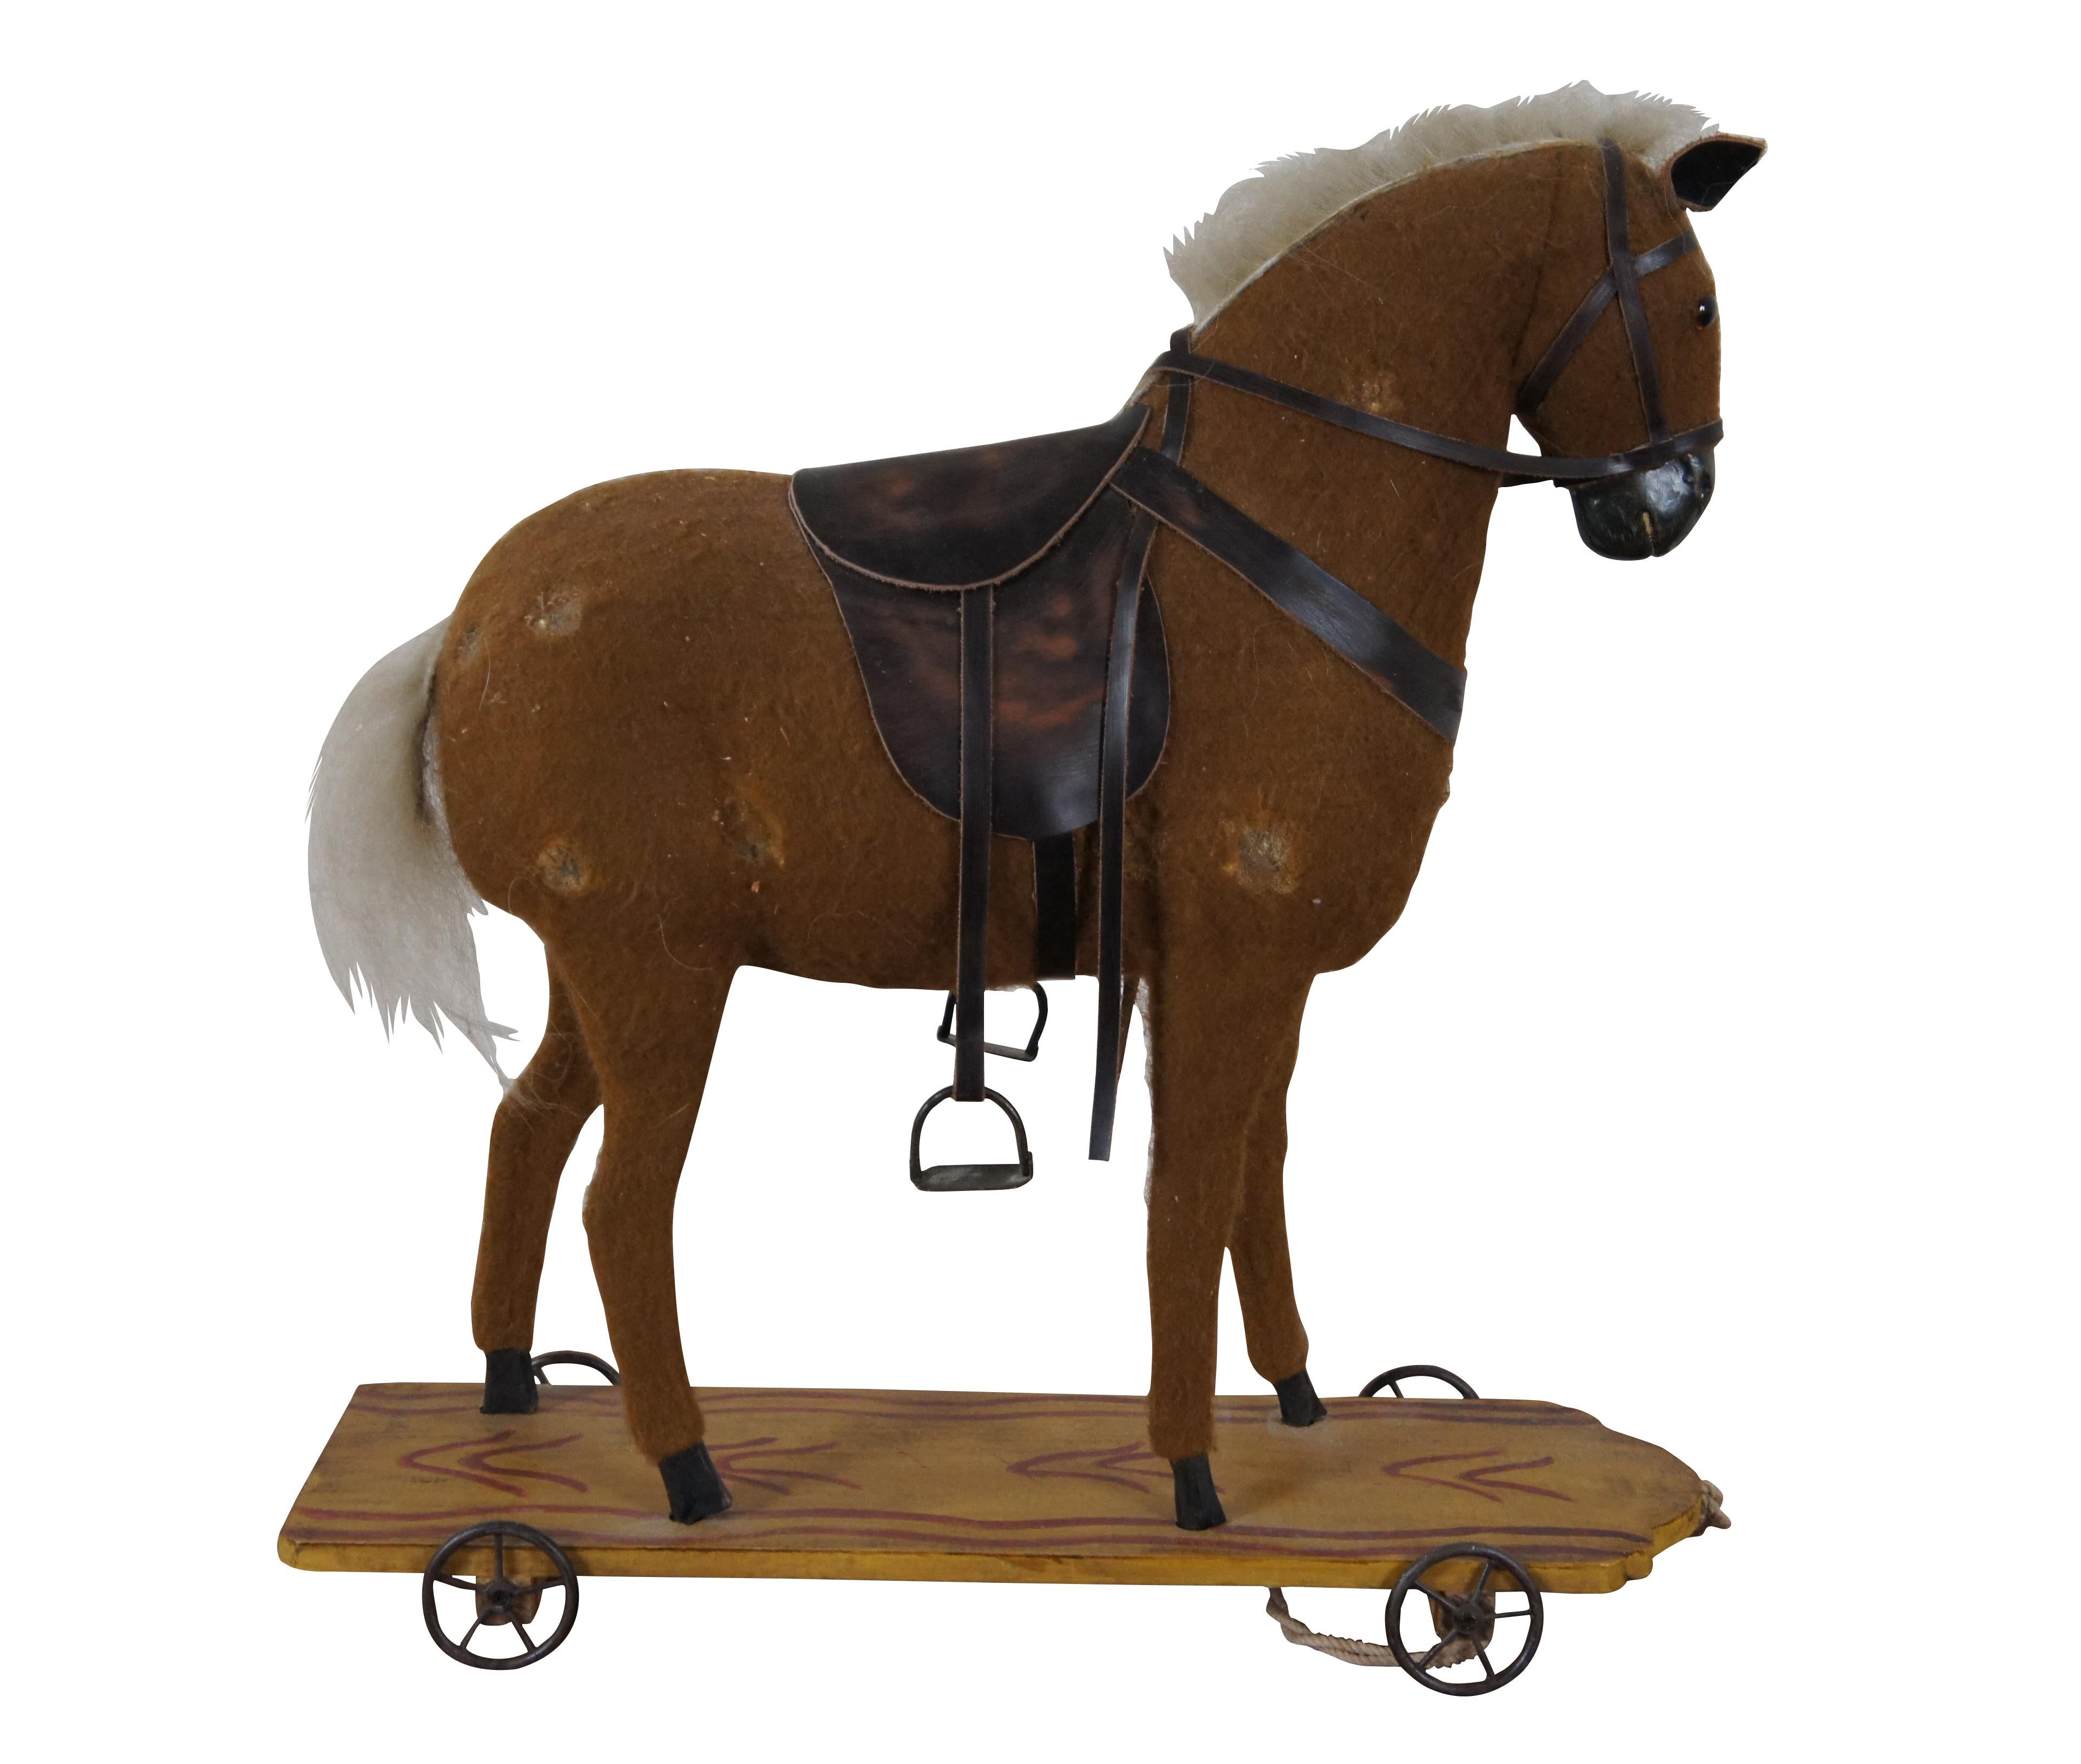 Vintage folk art pull toy featuring a felt horse on wood cart

DIMENSIONS
14.5” x 5” x 15” (Width x Depth x Height)